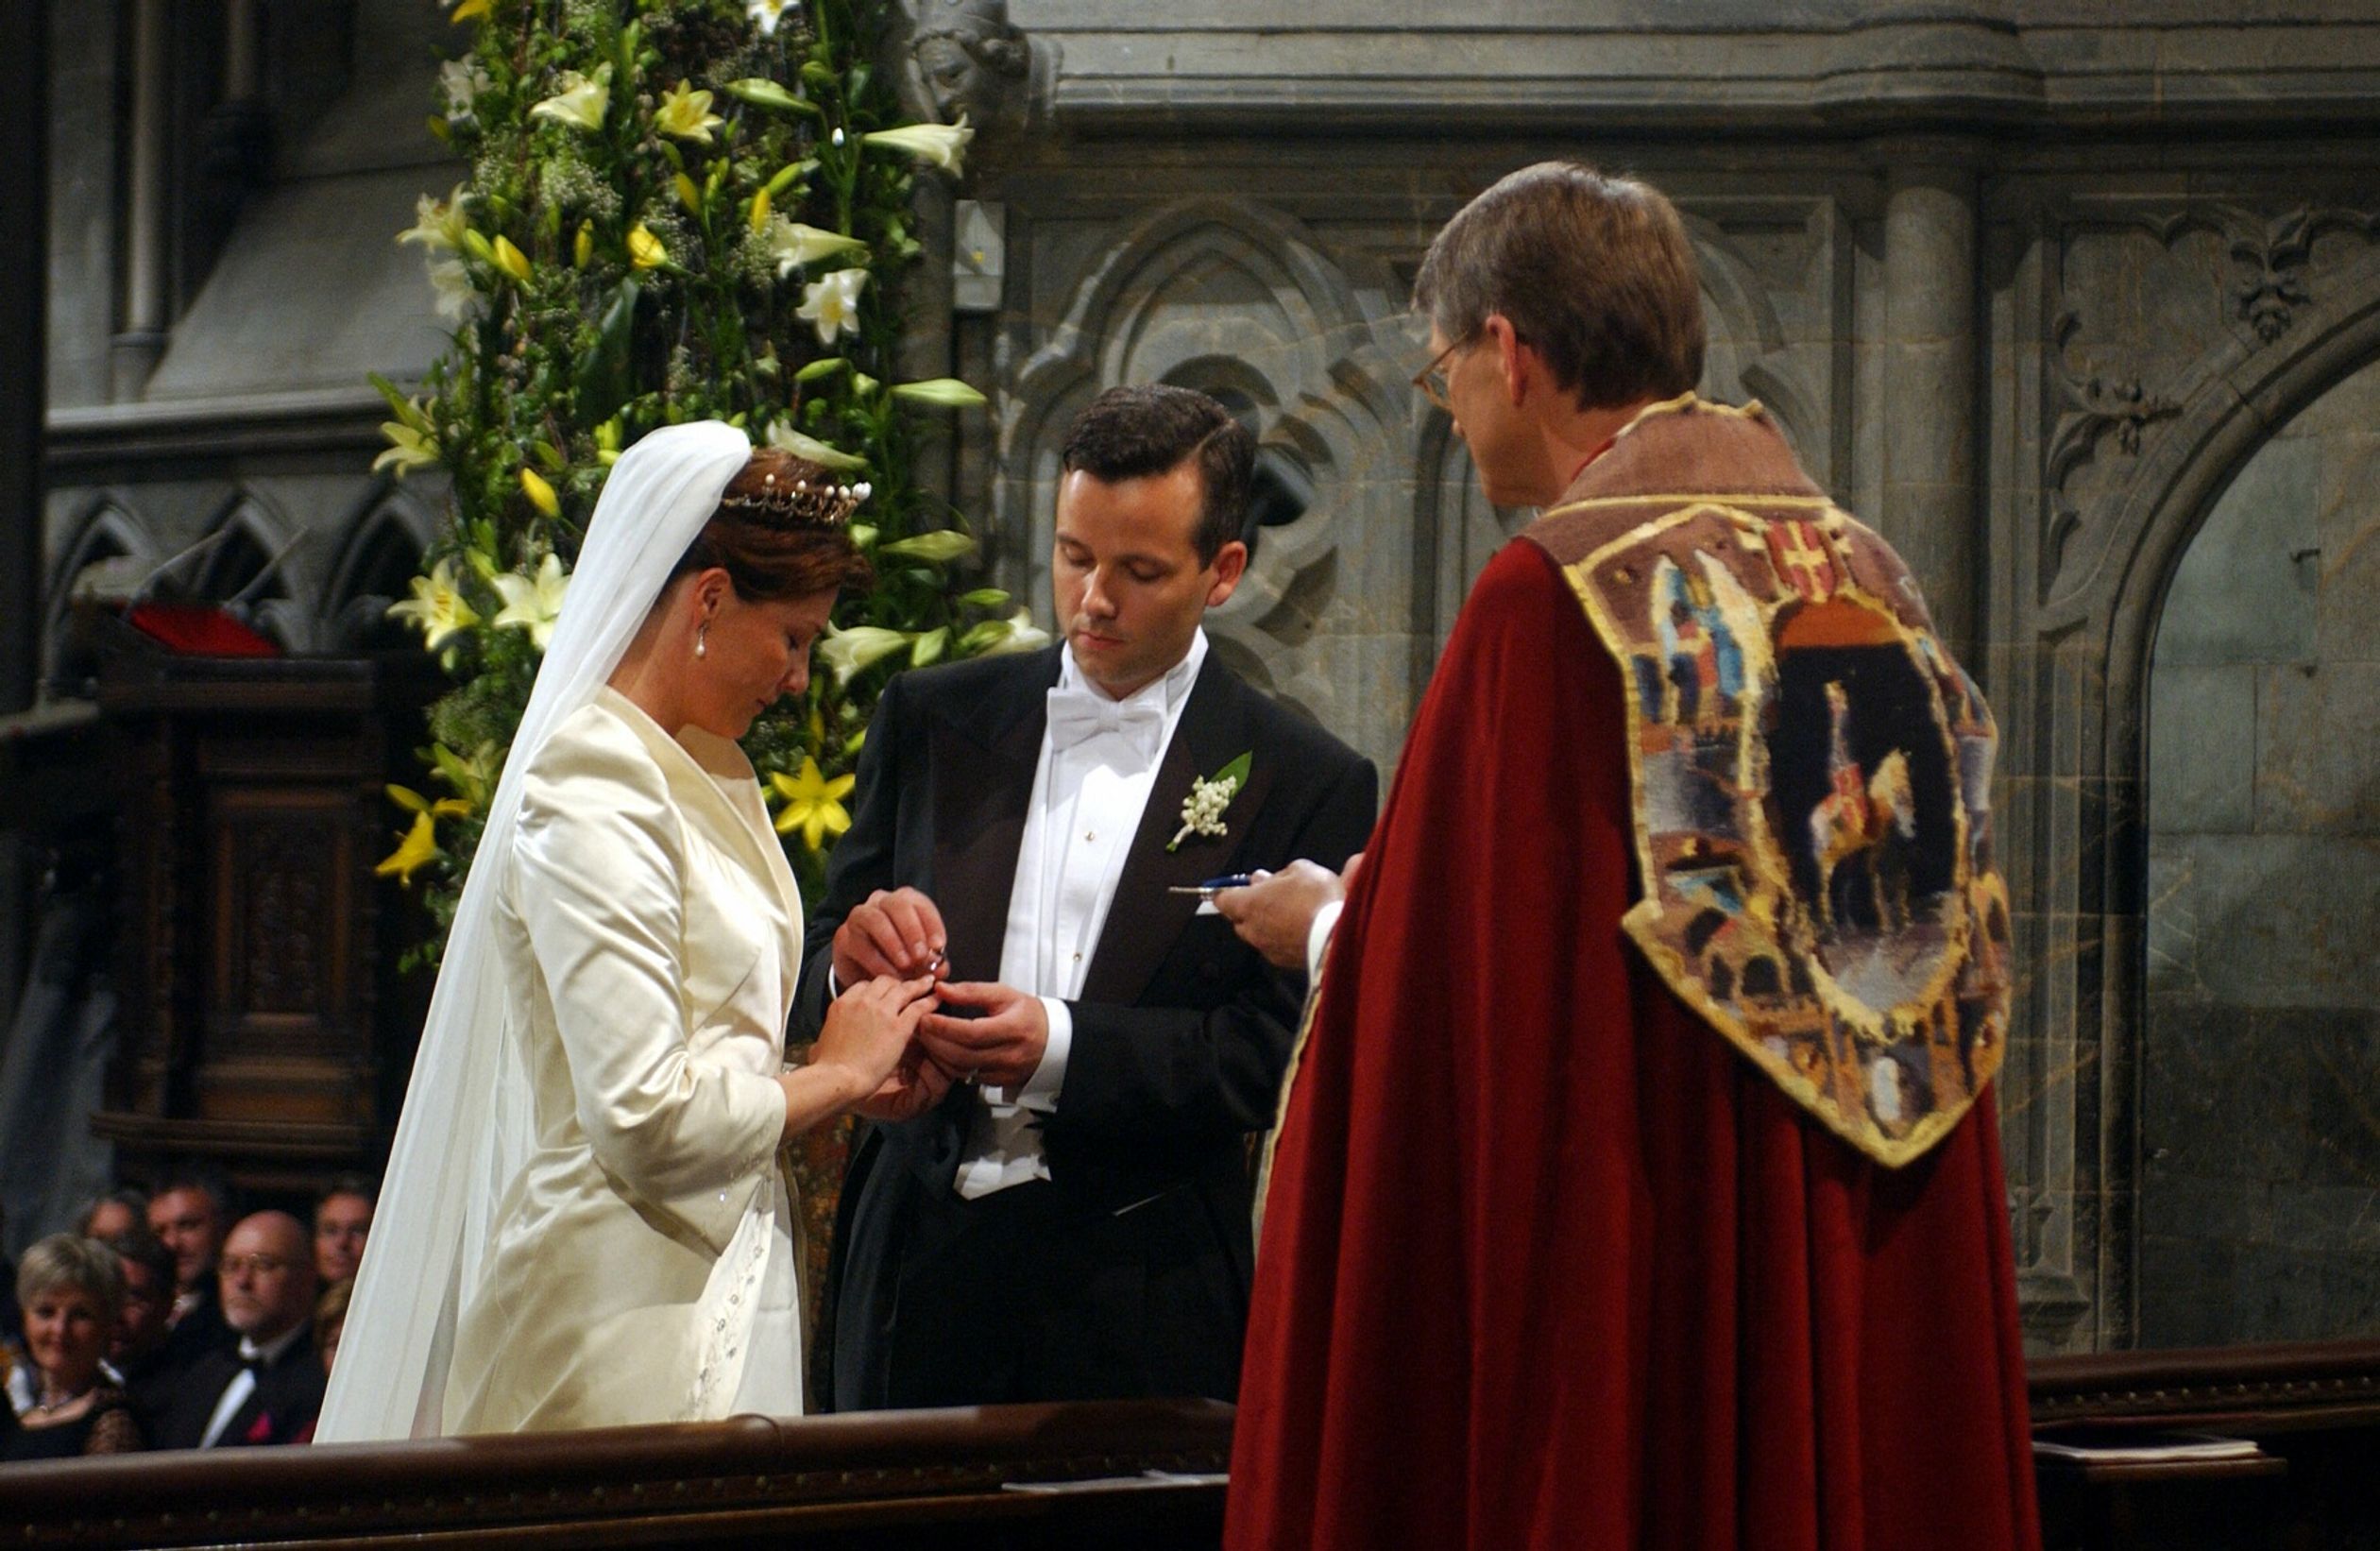 Op 24 mei 2002 trouwen Märtha-Louise en Ari Behn in de Nidaros kathedraal in Trondheim.